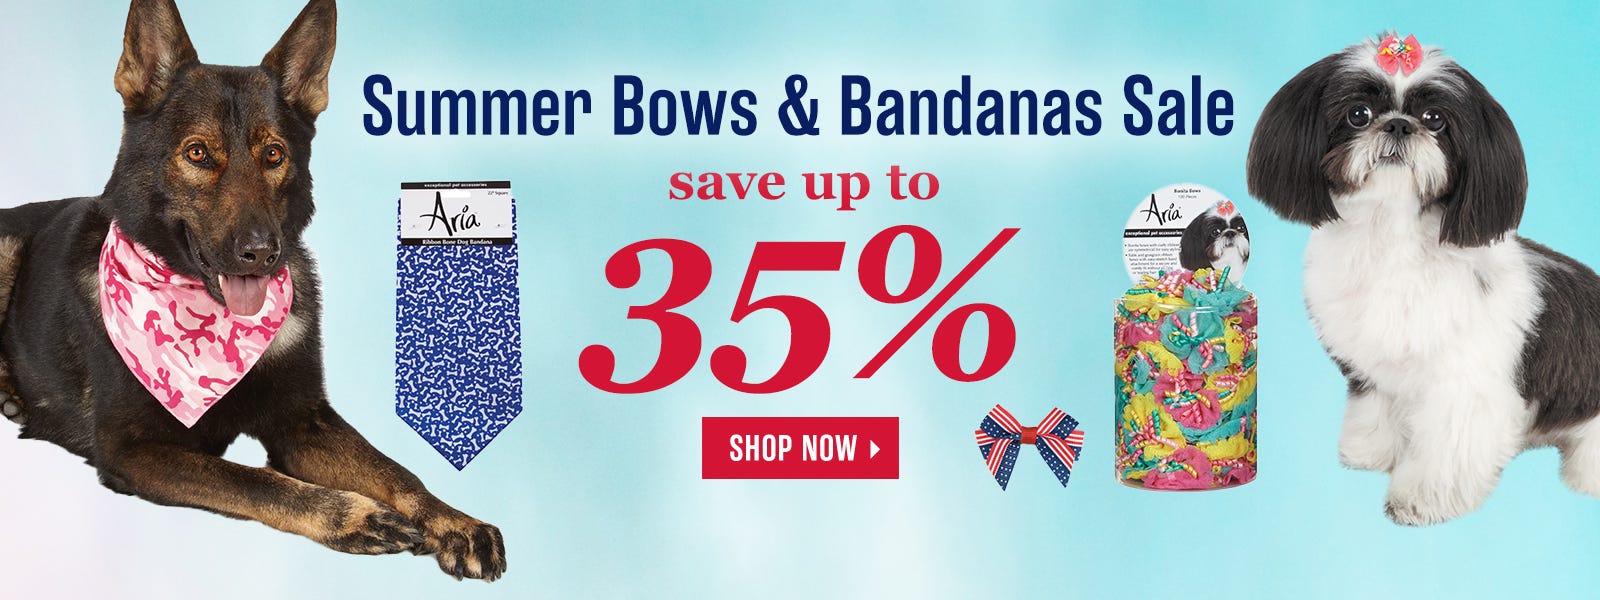 Summer Bows & Bandanas Sale